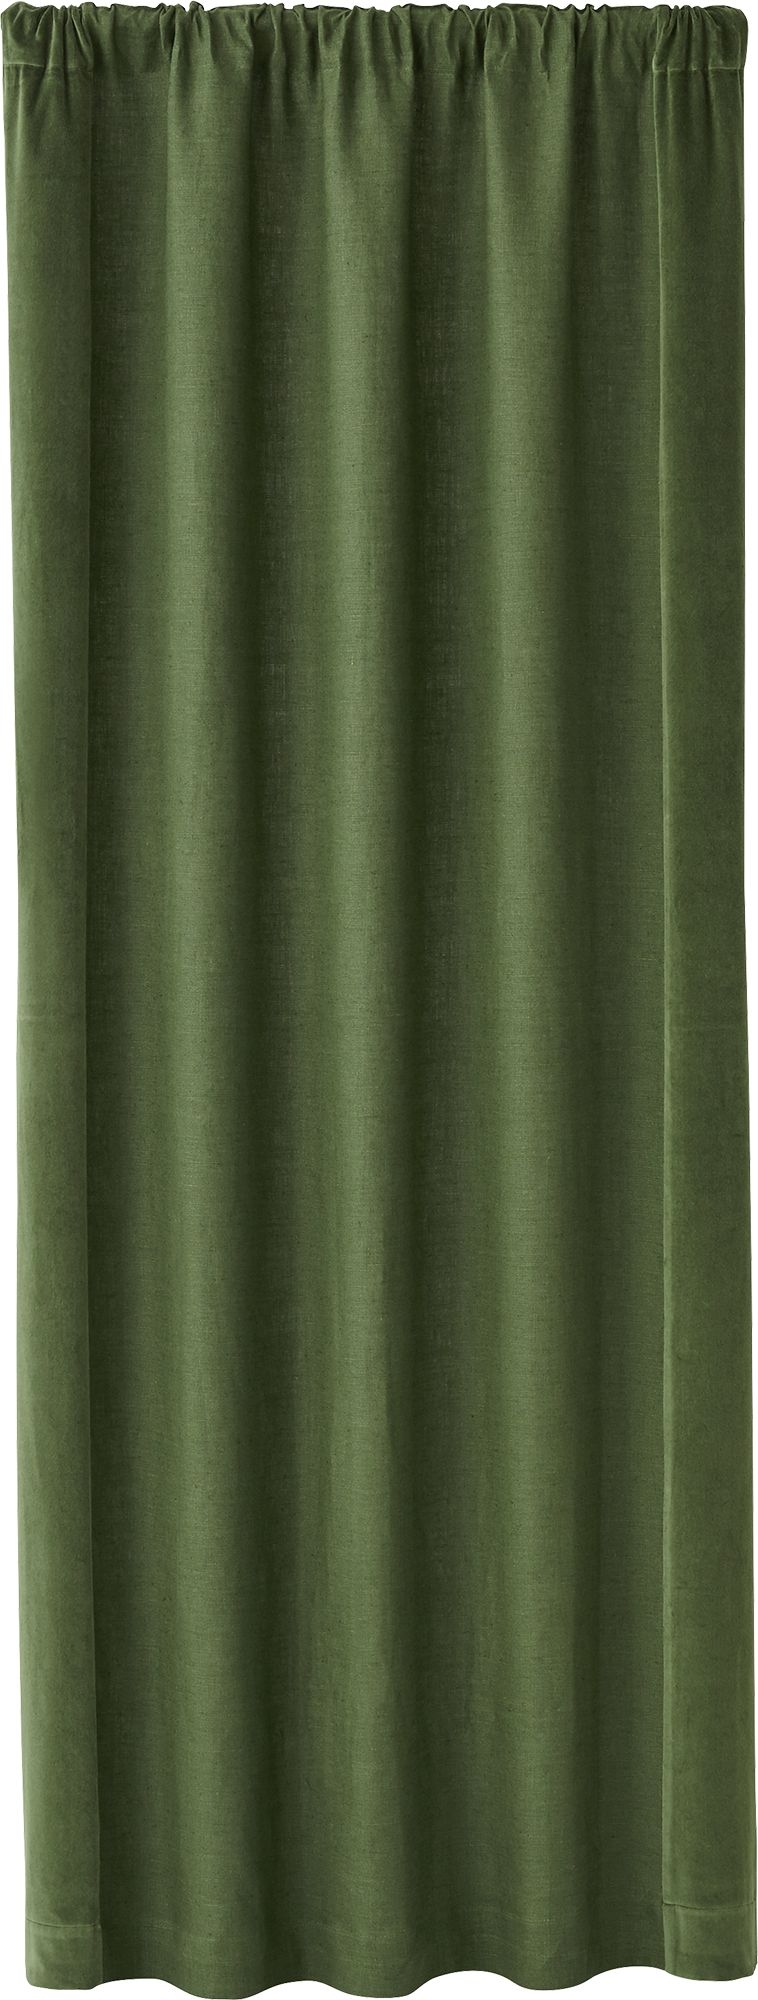 Ezria Green Linen Curtain Panel 48"x84" - Image 3